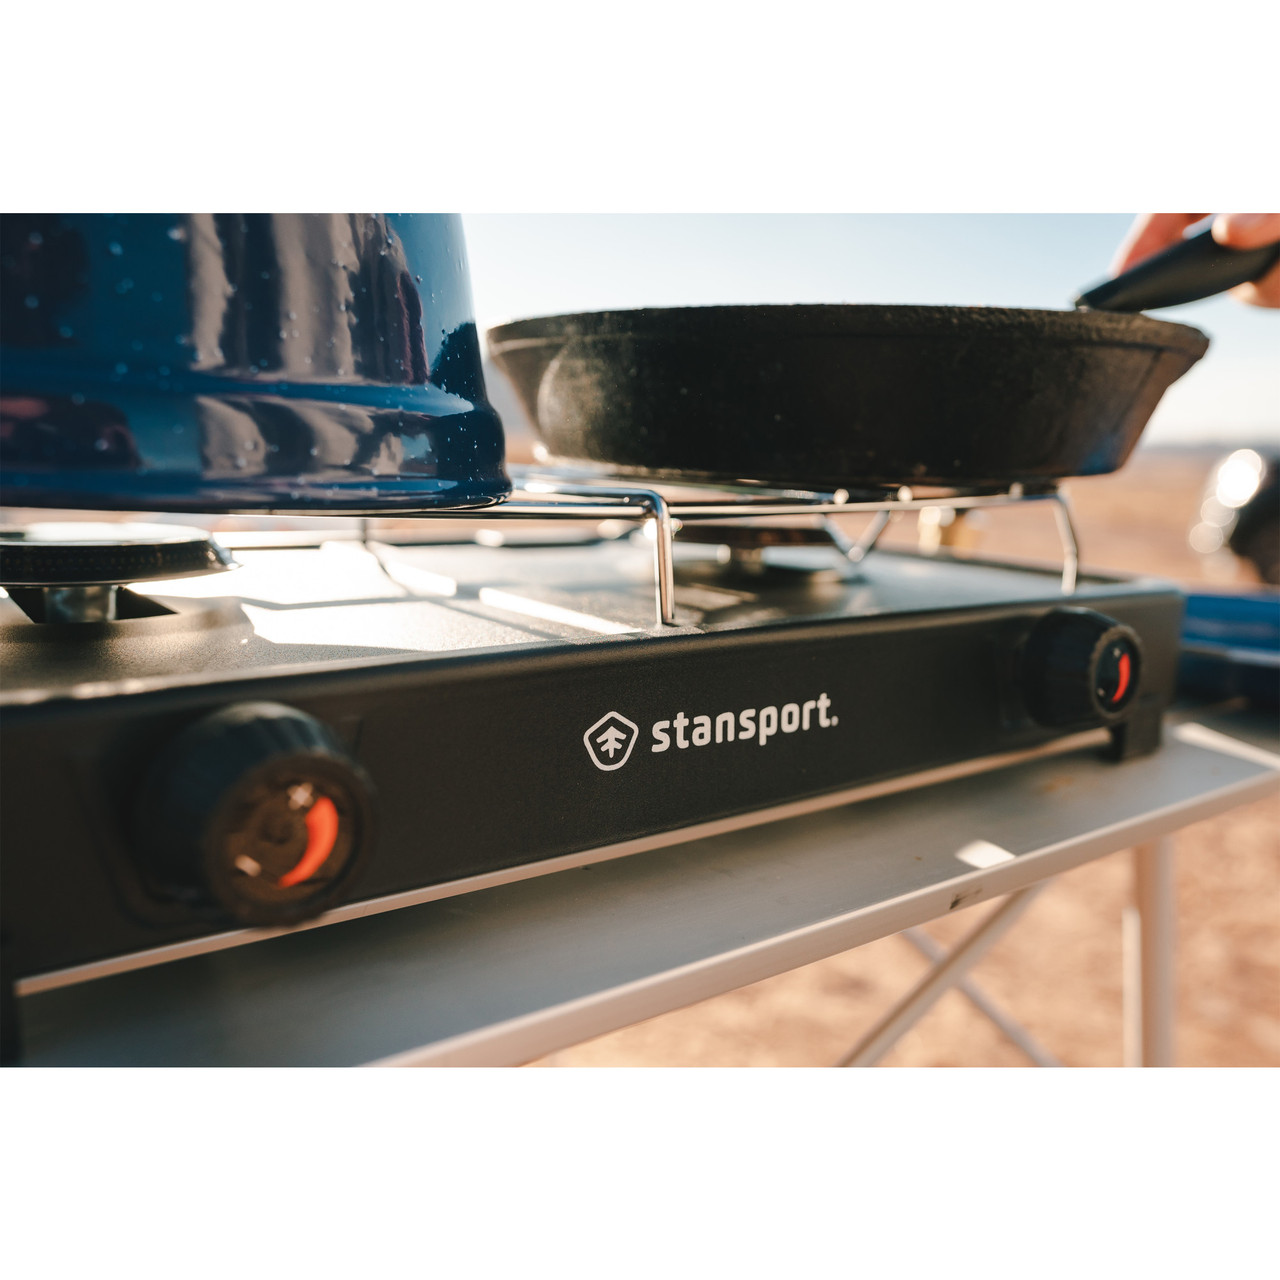 Stansport Propane Outdoor Camp Oven and 2 Burner Range